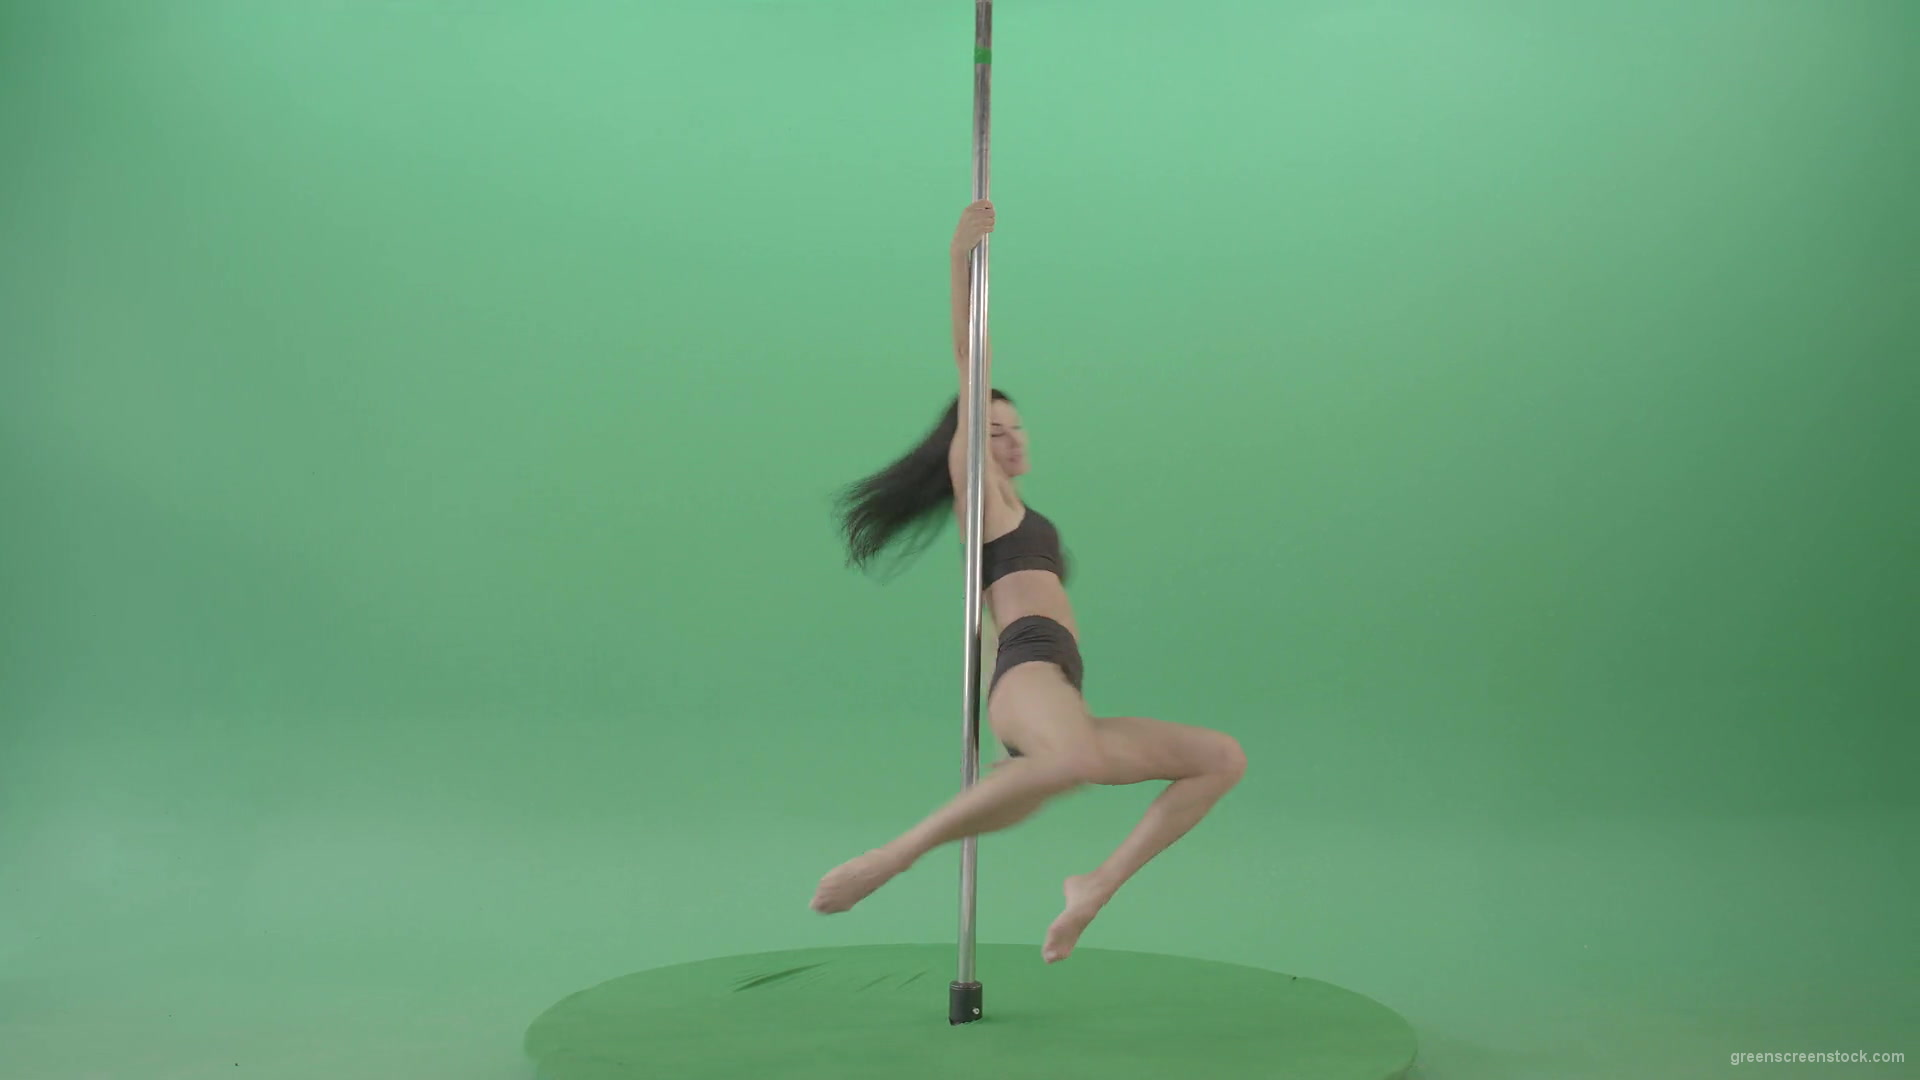 Artistic-gymnast-model-showing-strip-pole-dance-element-on-green-screen-4K-Video-Footage-1920_004 Green Screen Stock